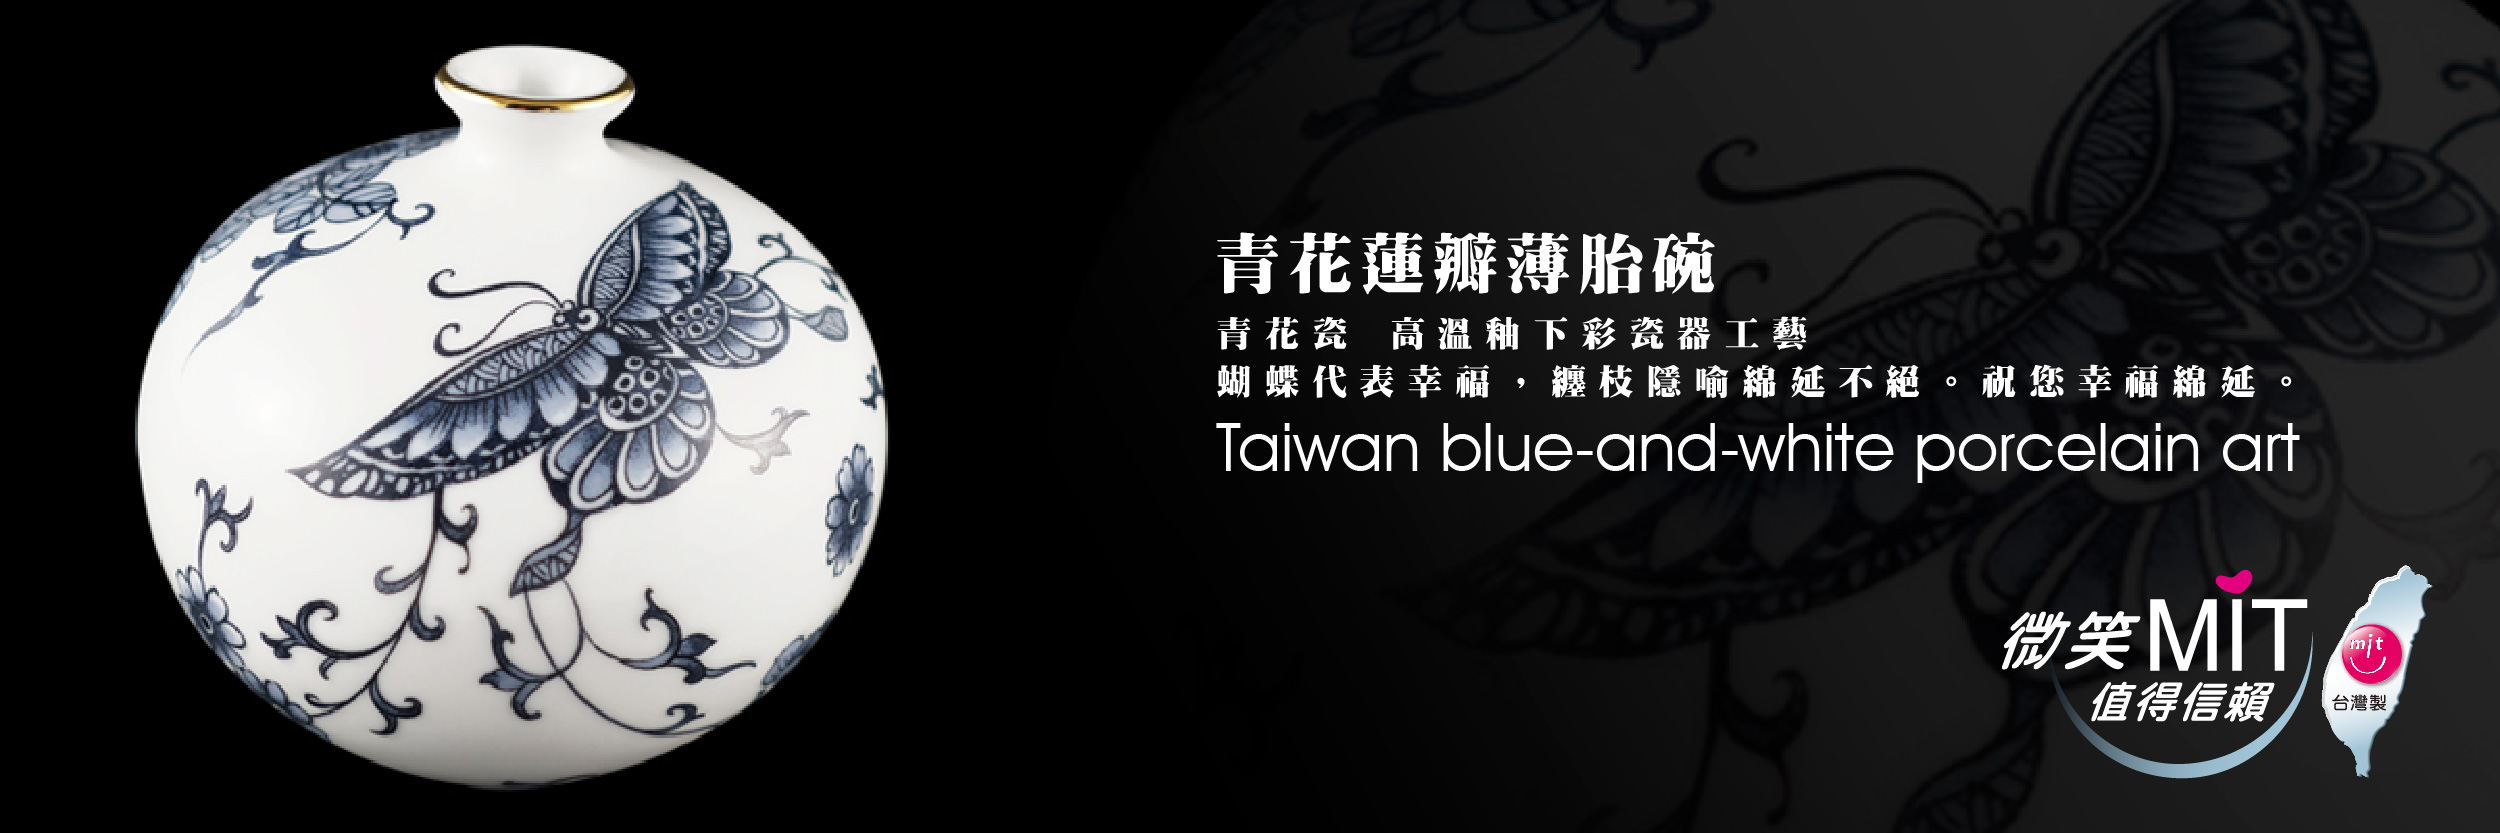 【微笑台灣MIT認證金選】幸福綿延 青花蝴蝶天球 Taiwan blue-and-white porcelain art